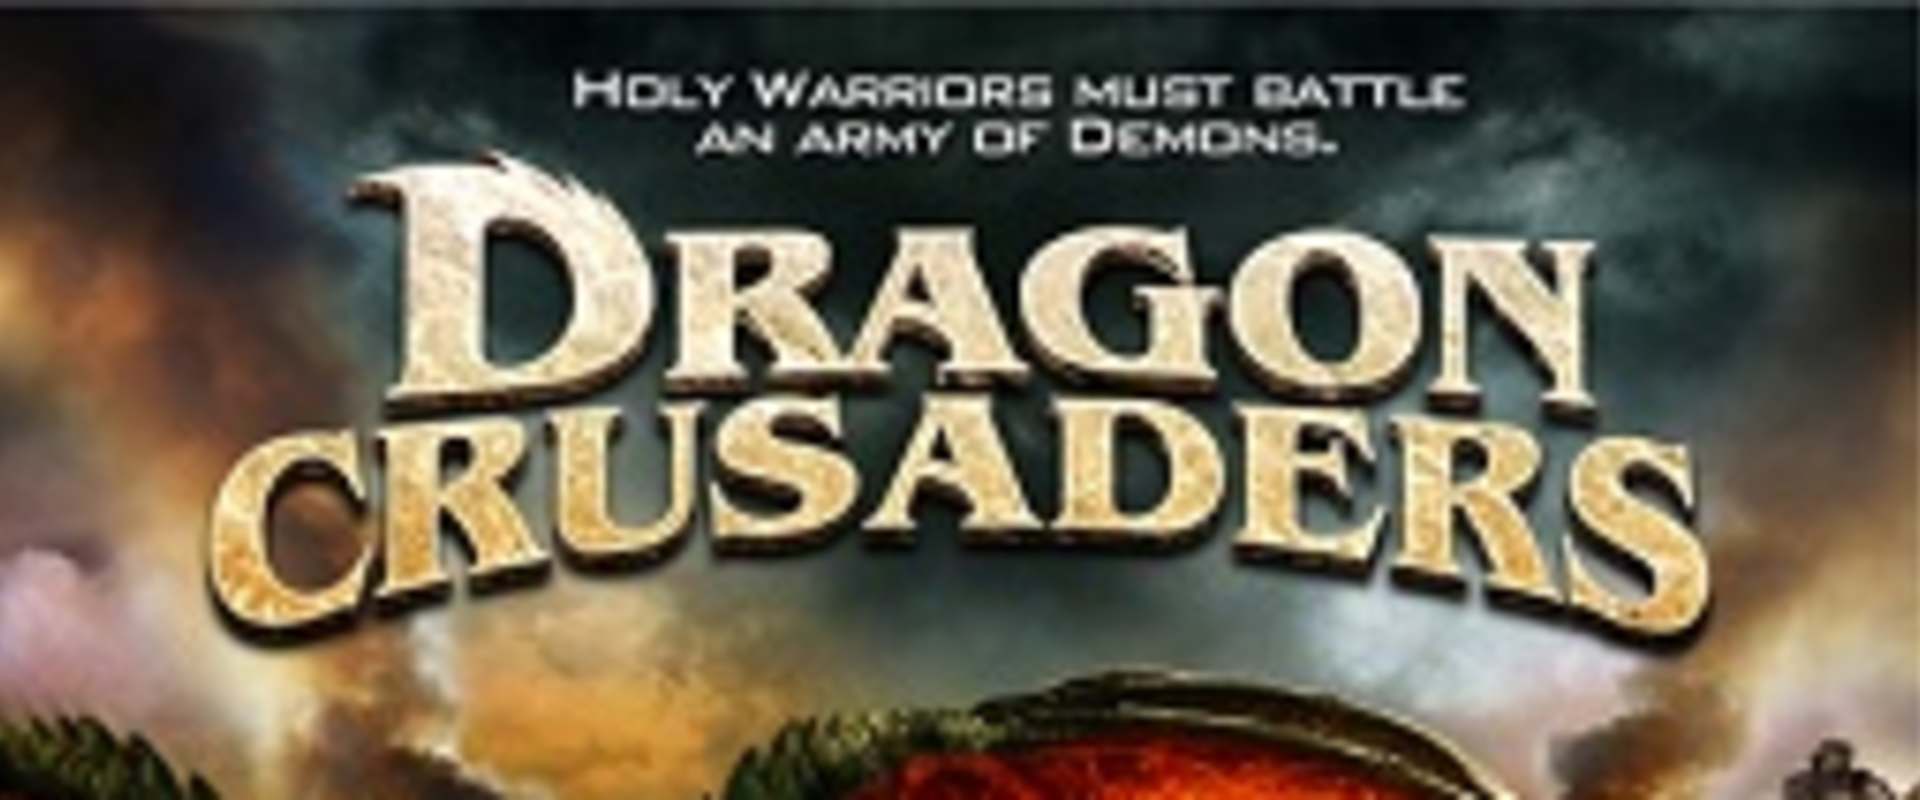 Dragon Crusaders background 2